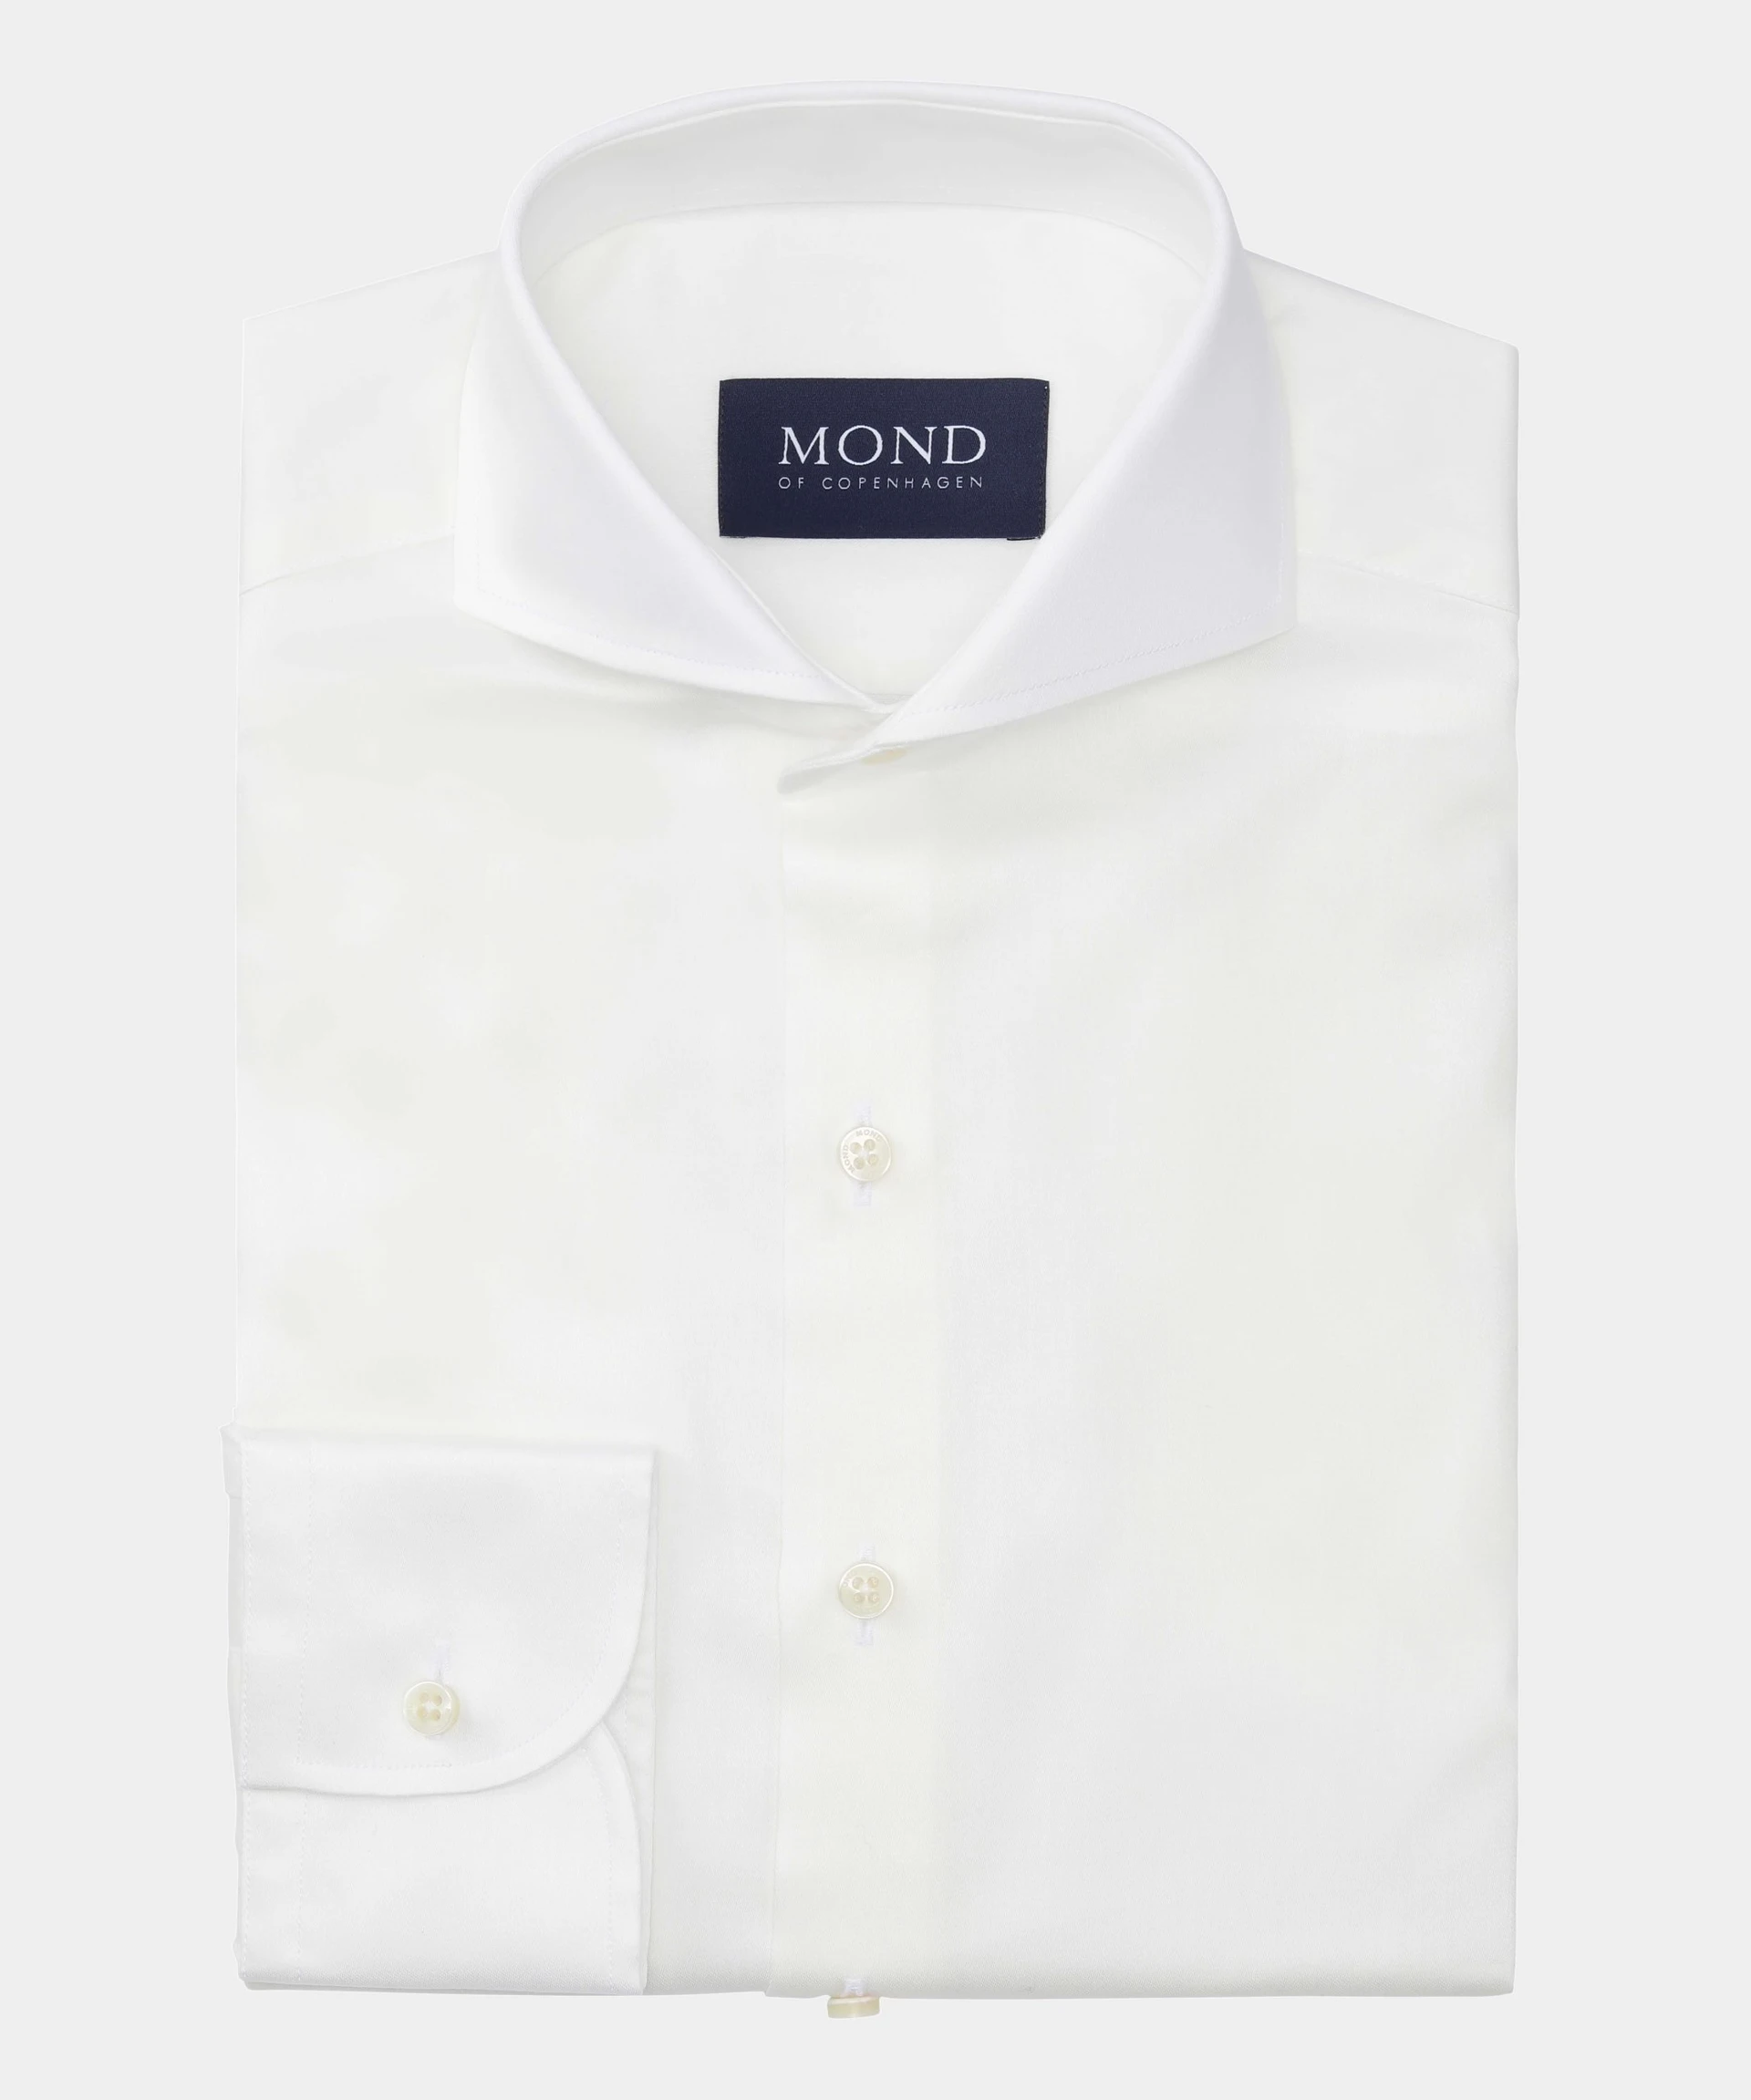 Off-white Journey Satin Piquet custom shirt by mond of copenhagen